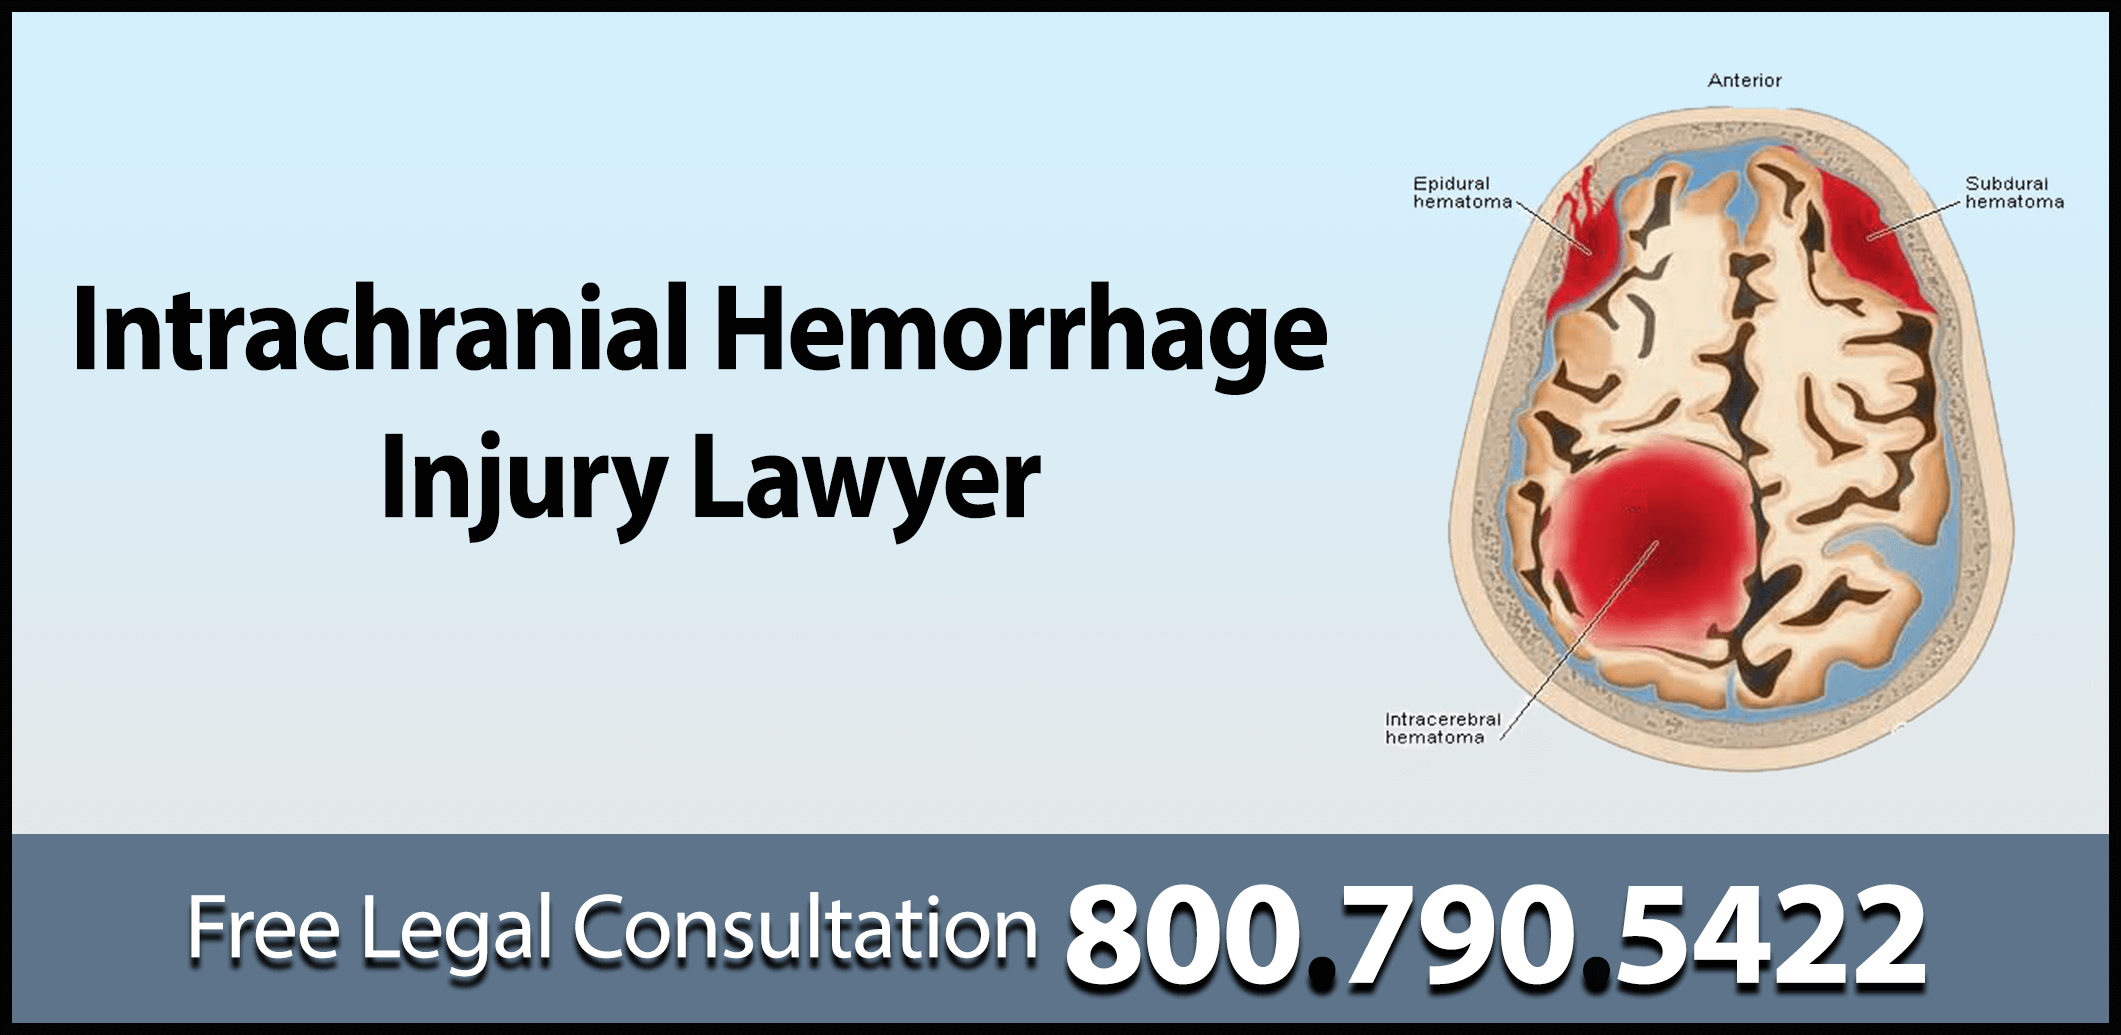 Intrachranial hemorrhage injury personal lawyer blood vessel sleep apnea seizuure compensation sue attorney lethargy consciousness shallow breathing